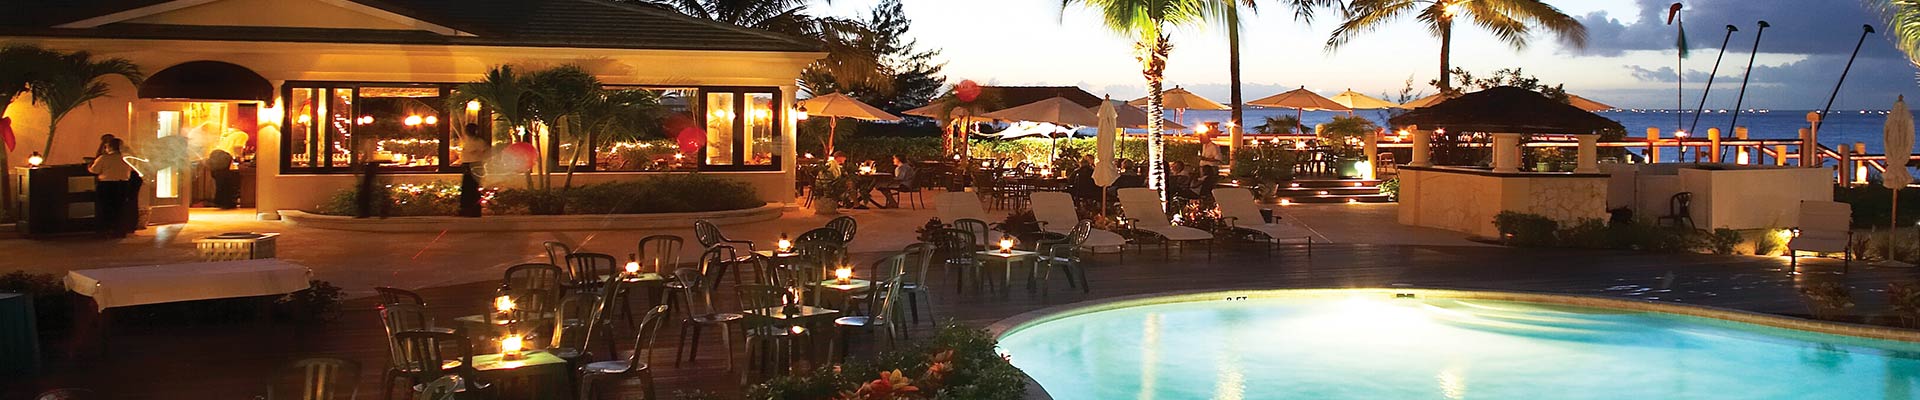 Hemingways Restaurant on Grace Bay Beach | The Sands on Grace Bay